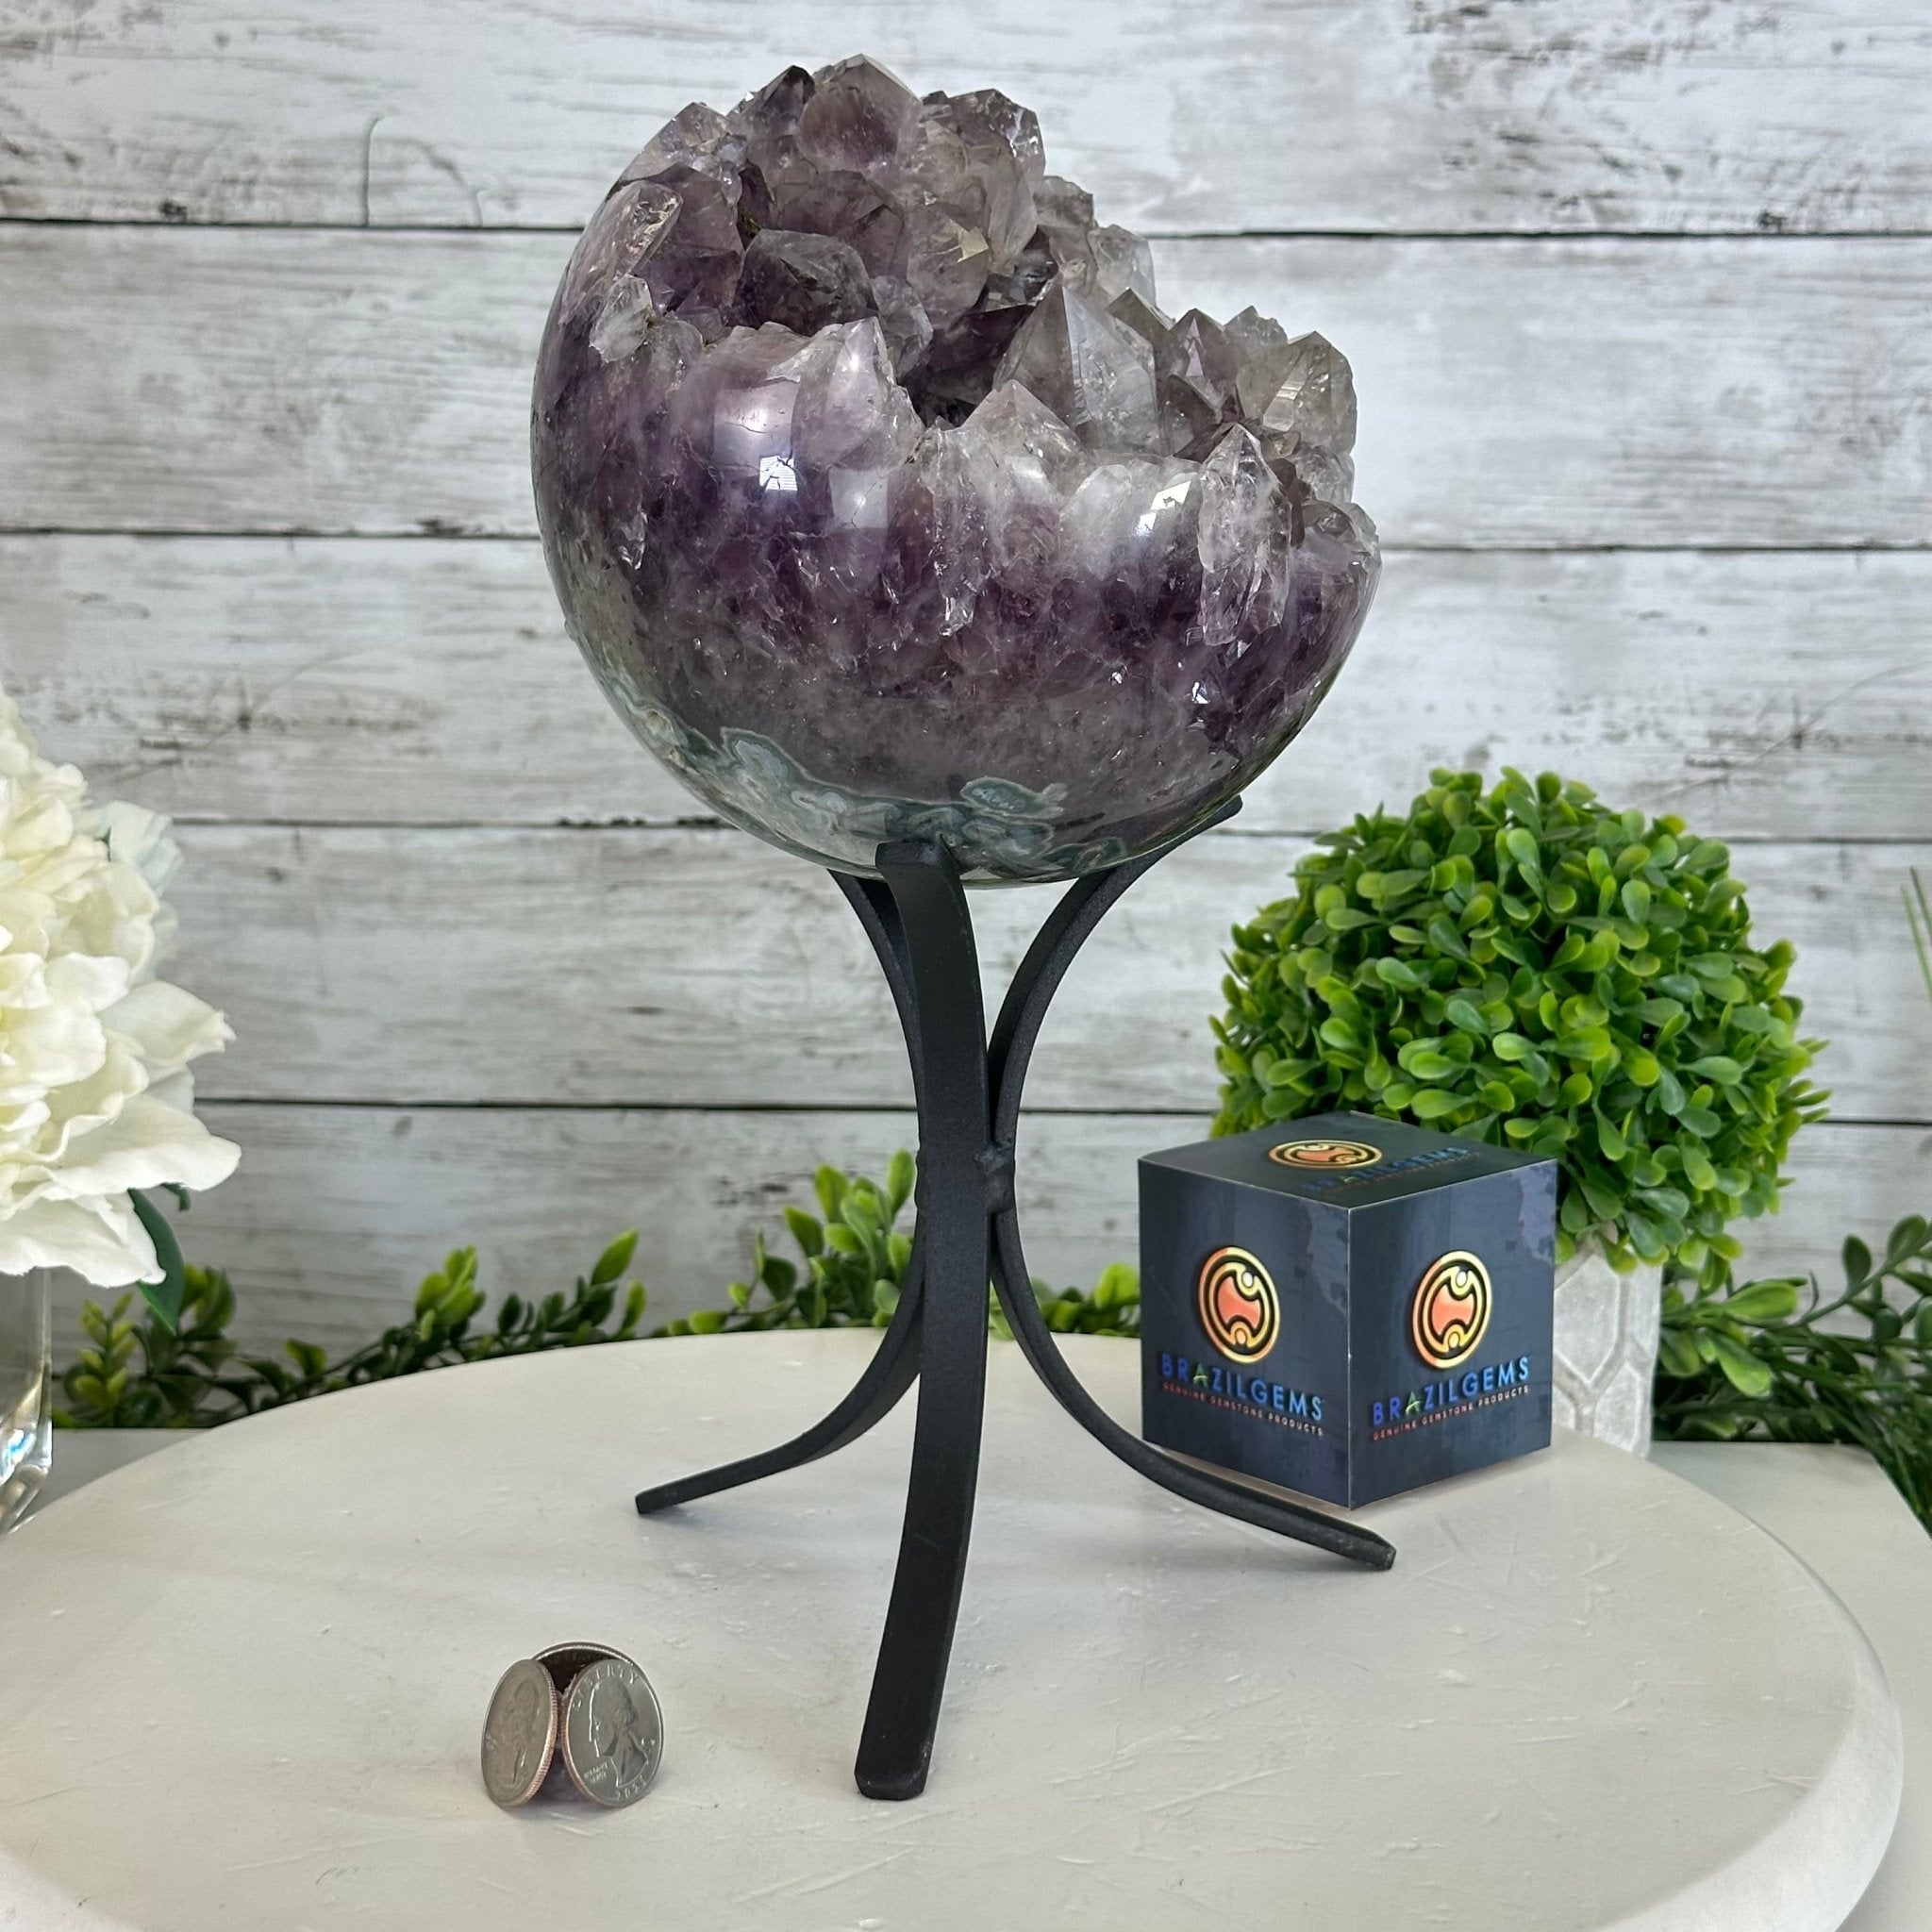 Druzy Amethyst Sphere on a Metal Stand, 8.2 lbs & 11.9" Tall #5630-0069 - Brazil GemsBrazil GemsDruzy Amethyst Sphere on a Metal Stand, 8.2 lbs & 11.9" Tall #5630-0069Spheres5630-0069